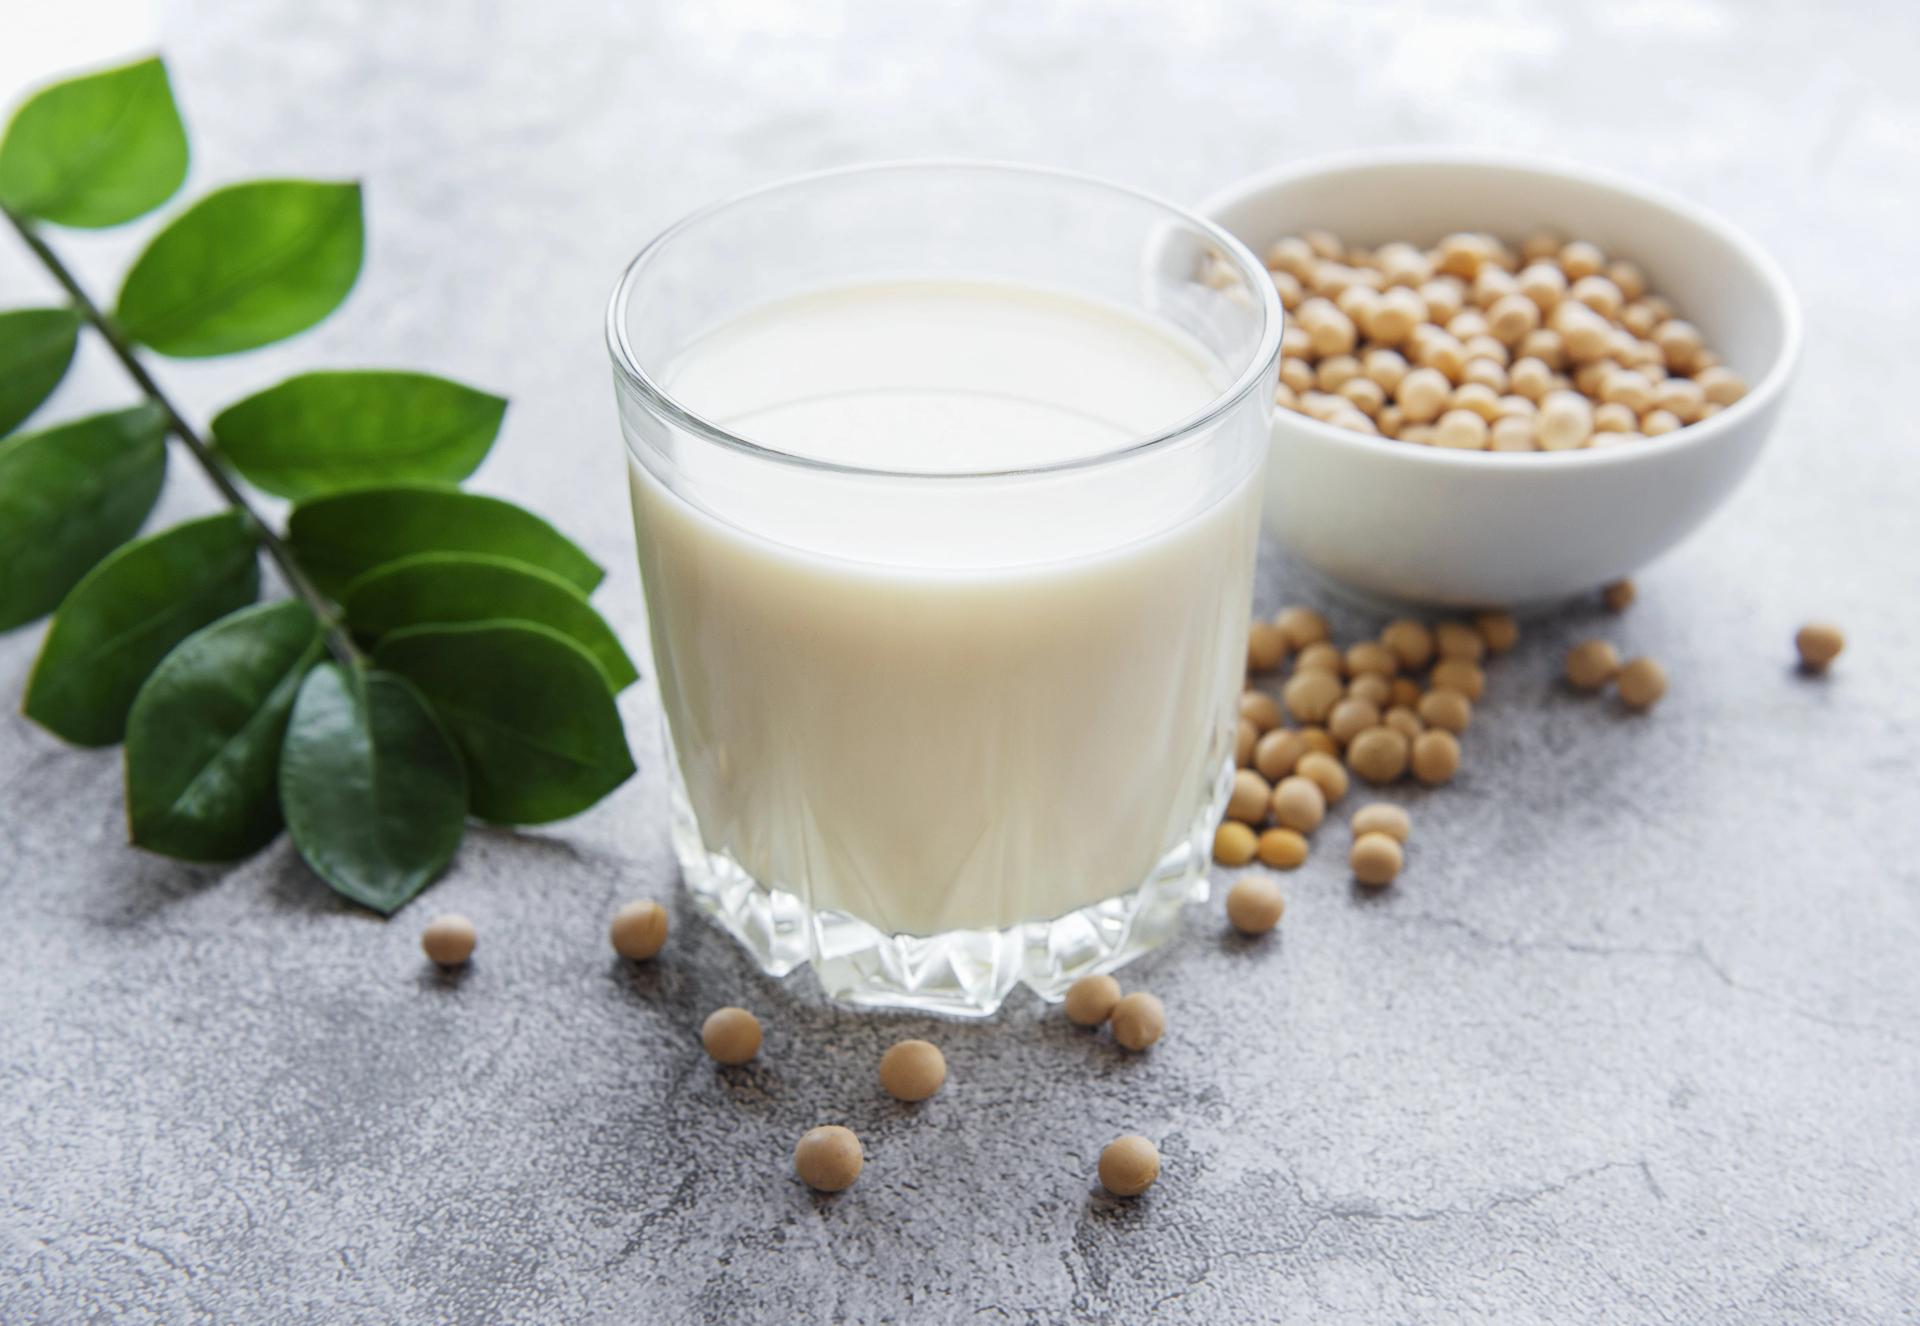 Milk As Fertilizer - Feeding Plants With Milk